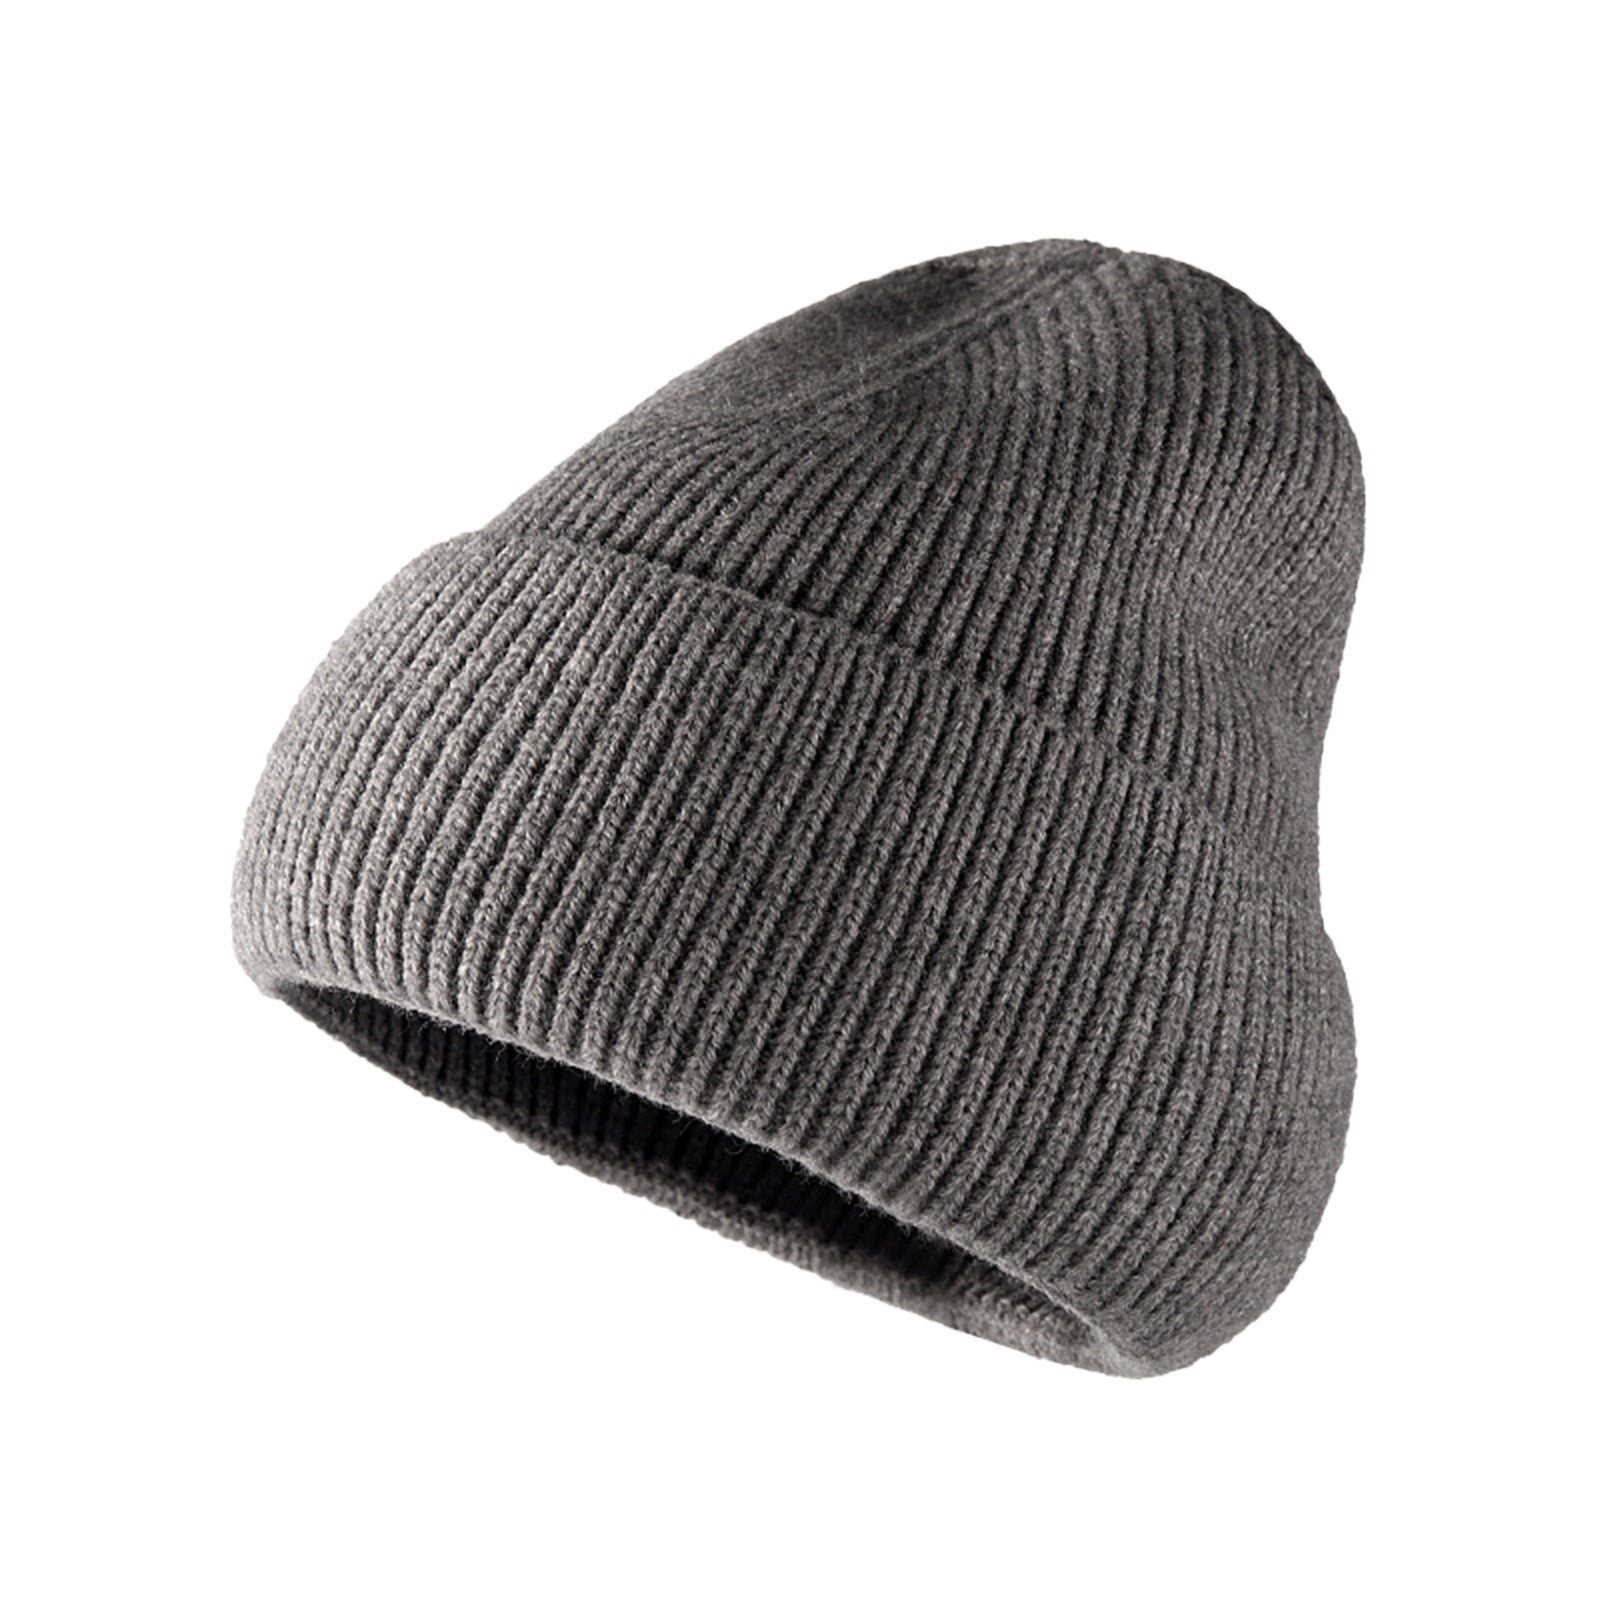 fvwitlyh Sweat Hat Fashion Hat Casual Knitted Hat Warm Woolen